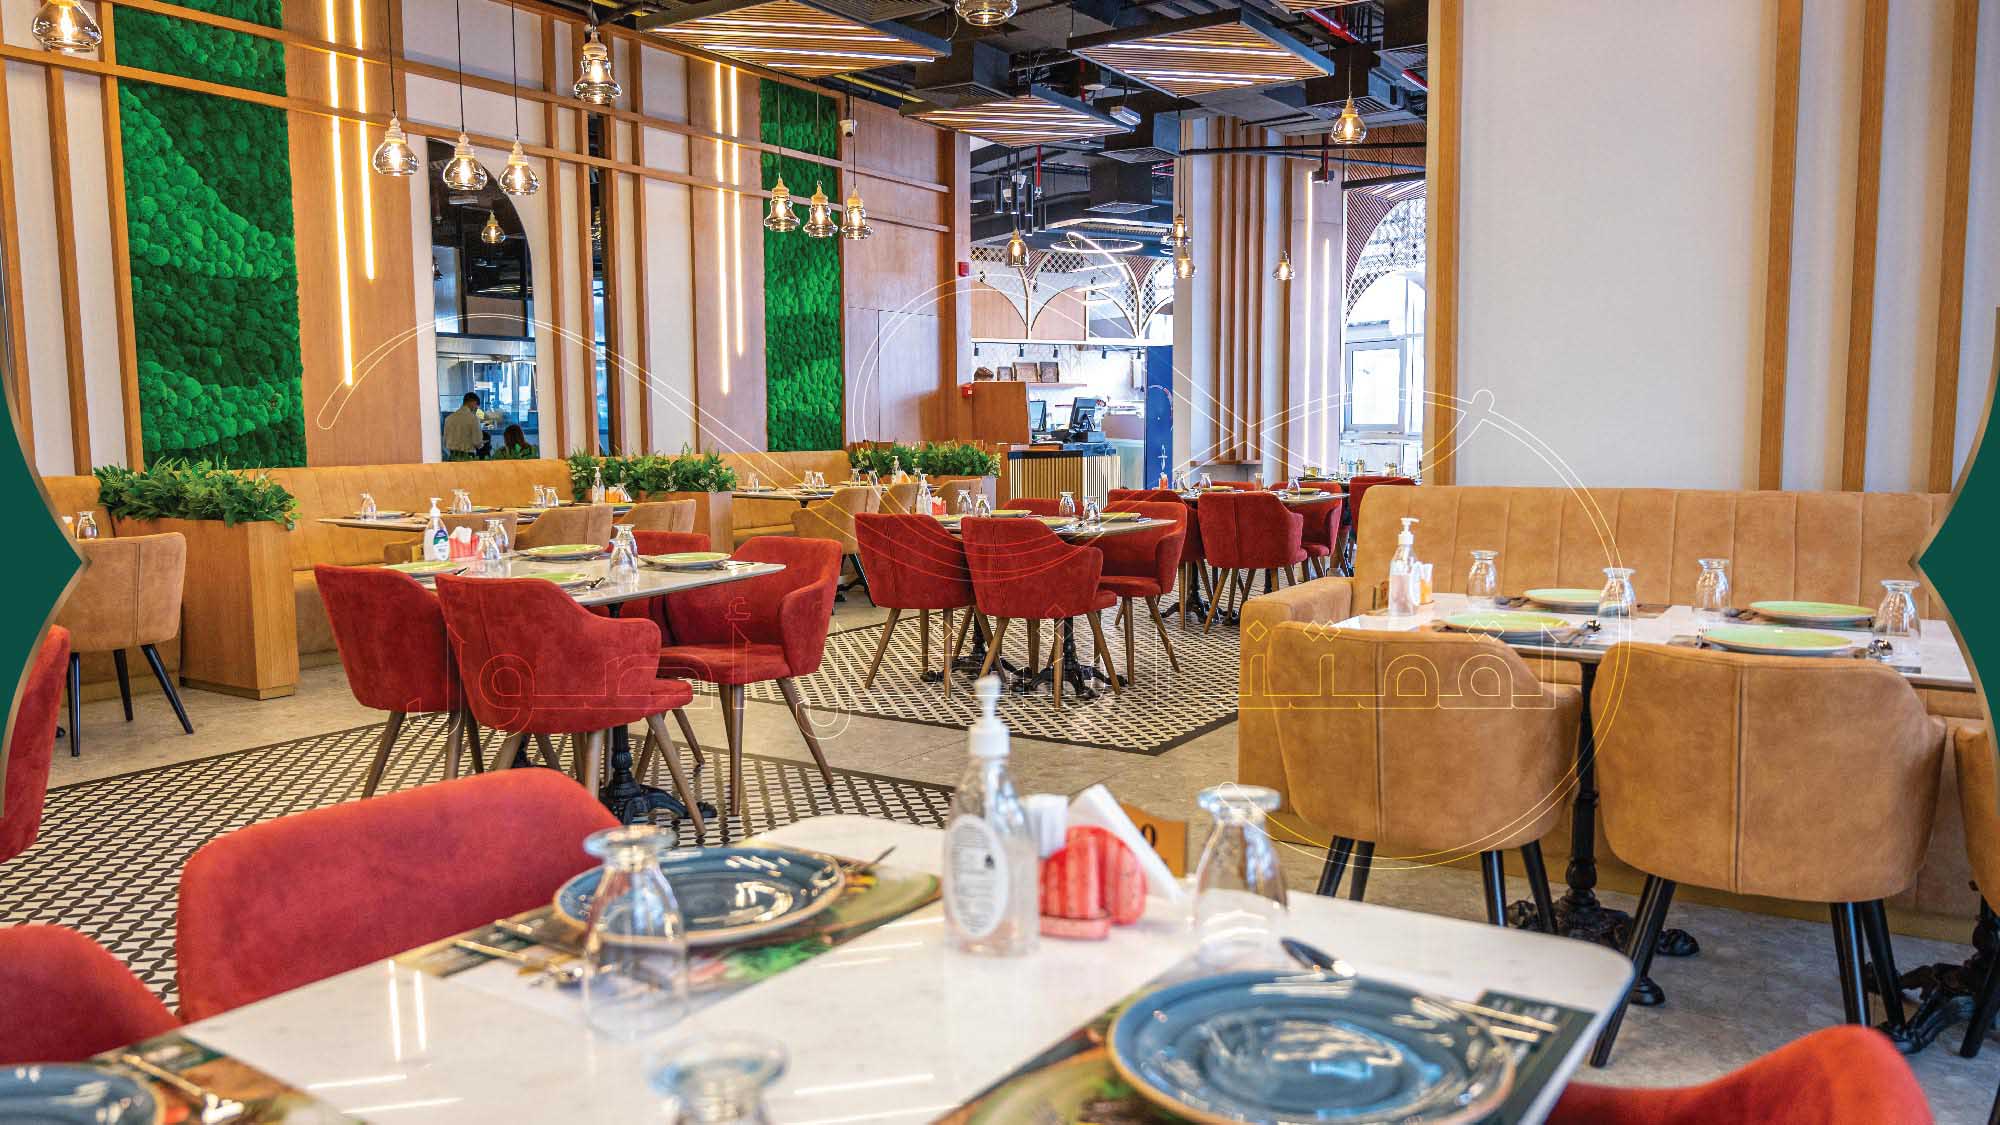 Visit Al Mashawi Al Halabya: The Best Restaurant in the UAE ​